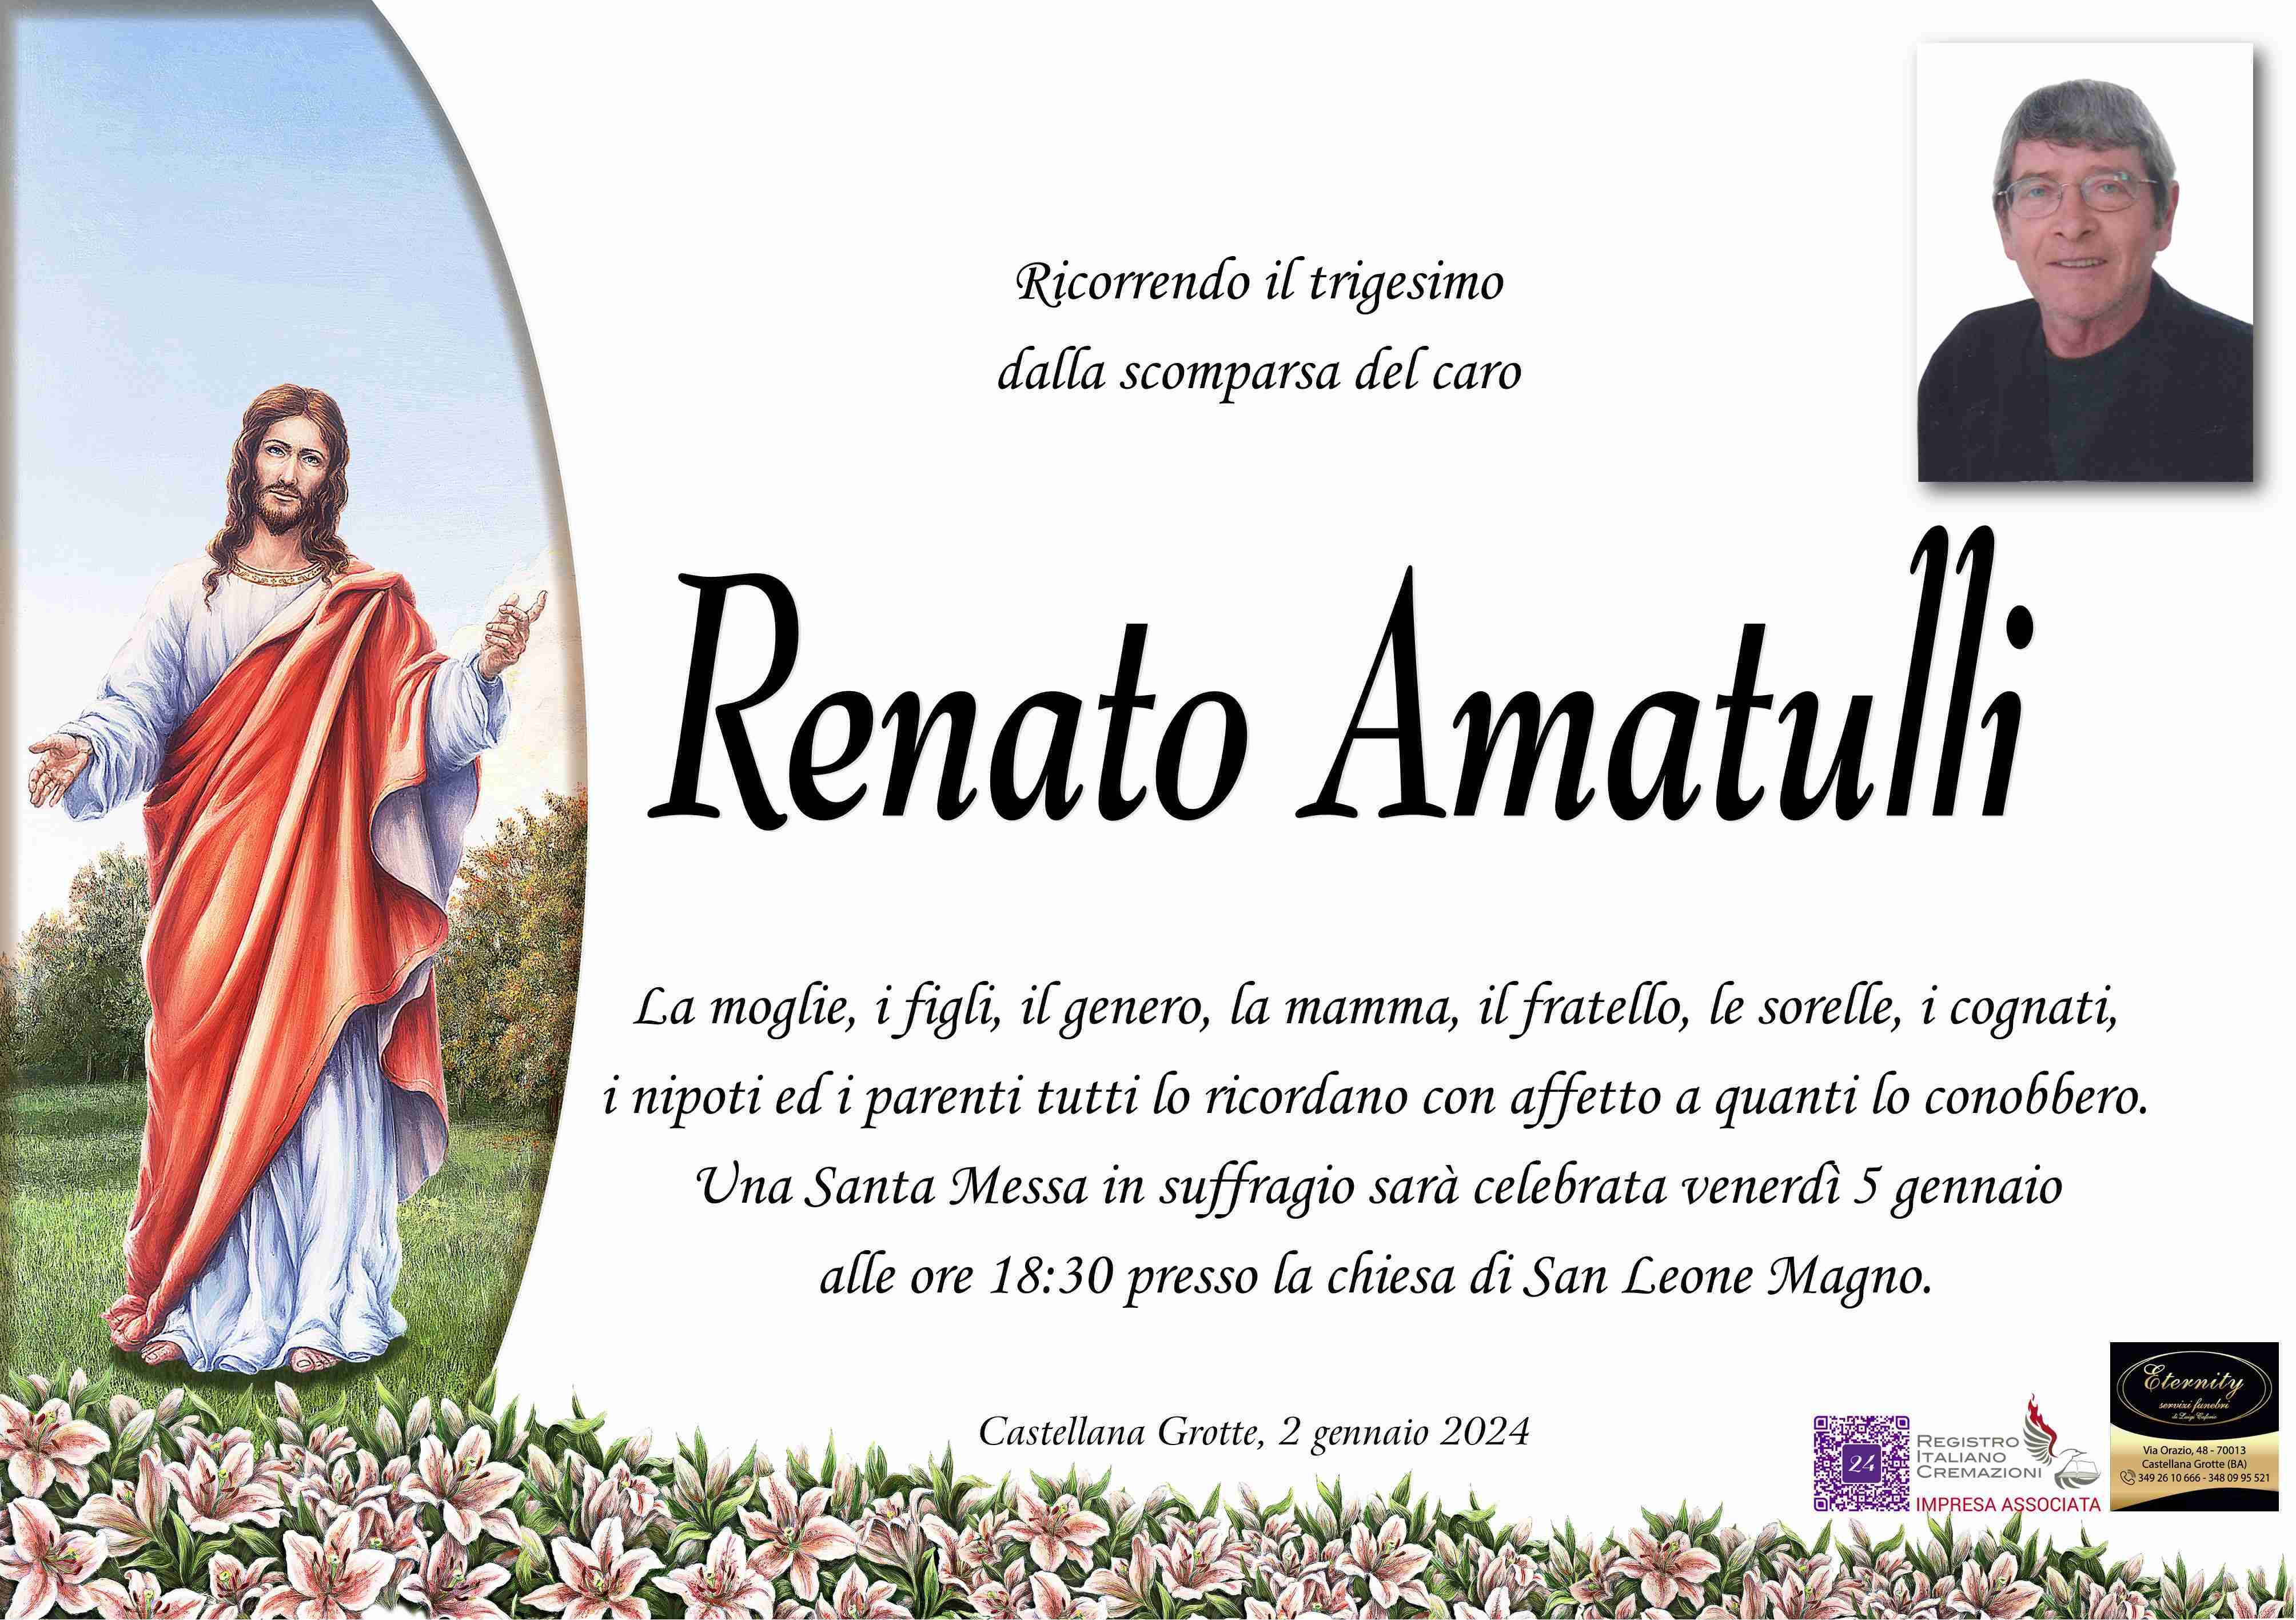 Renato Amatulli